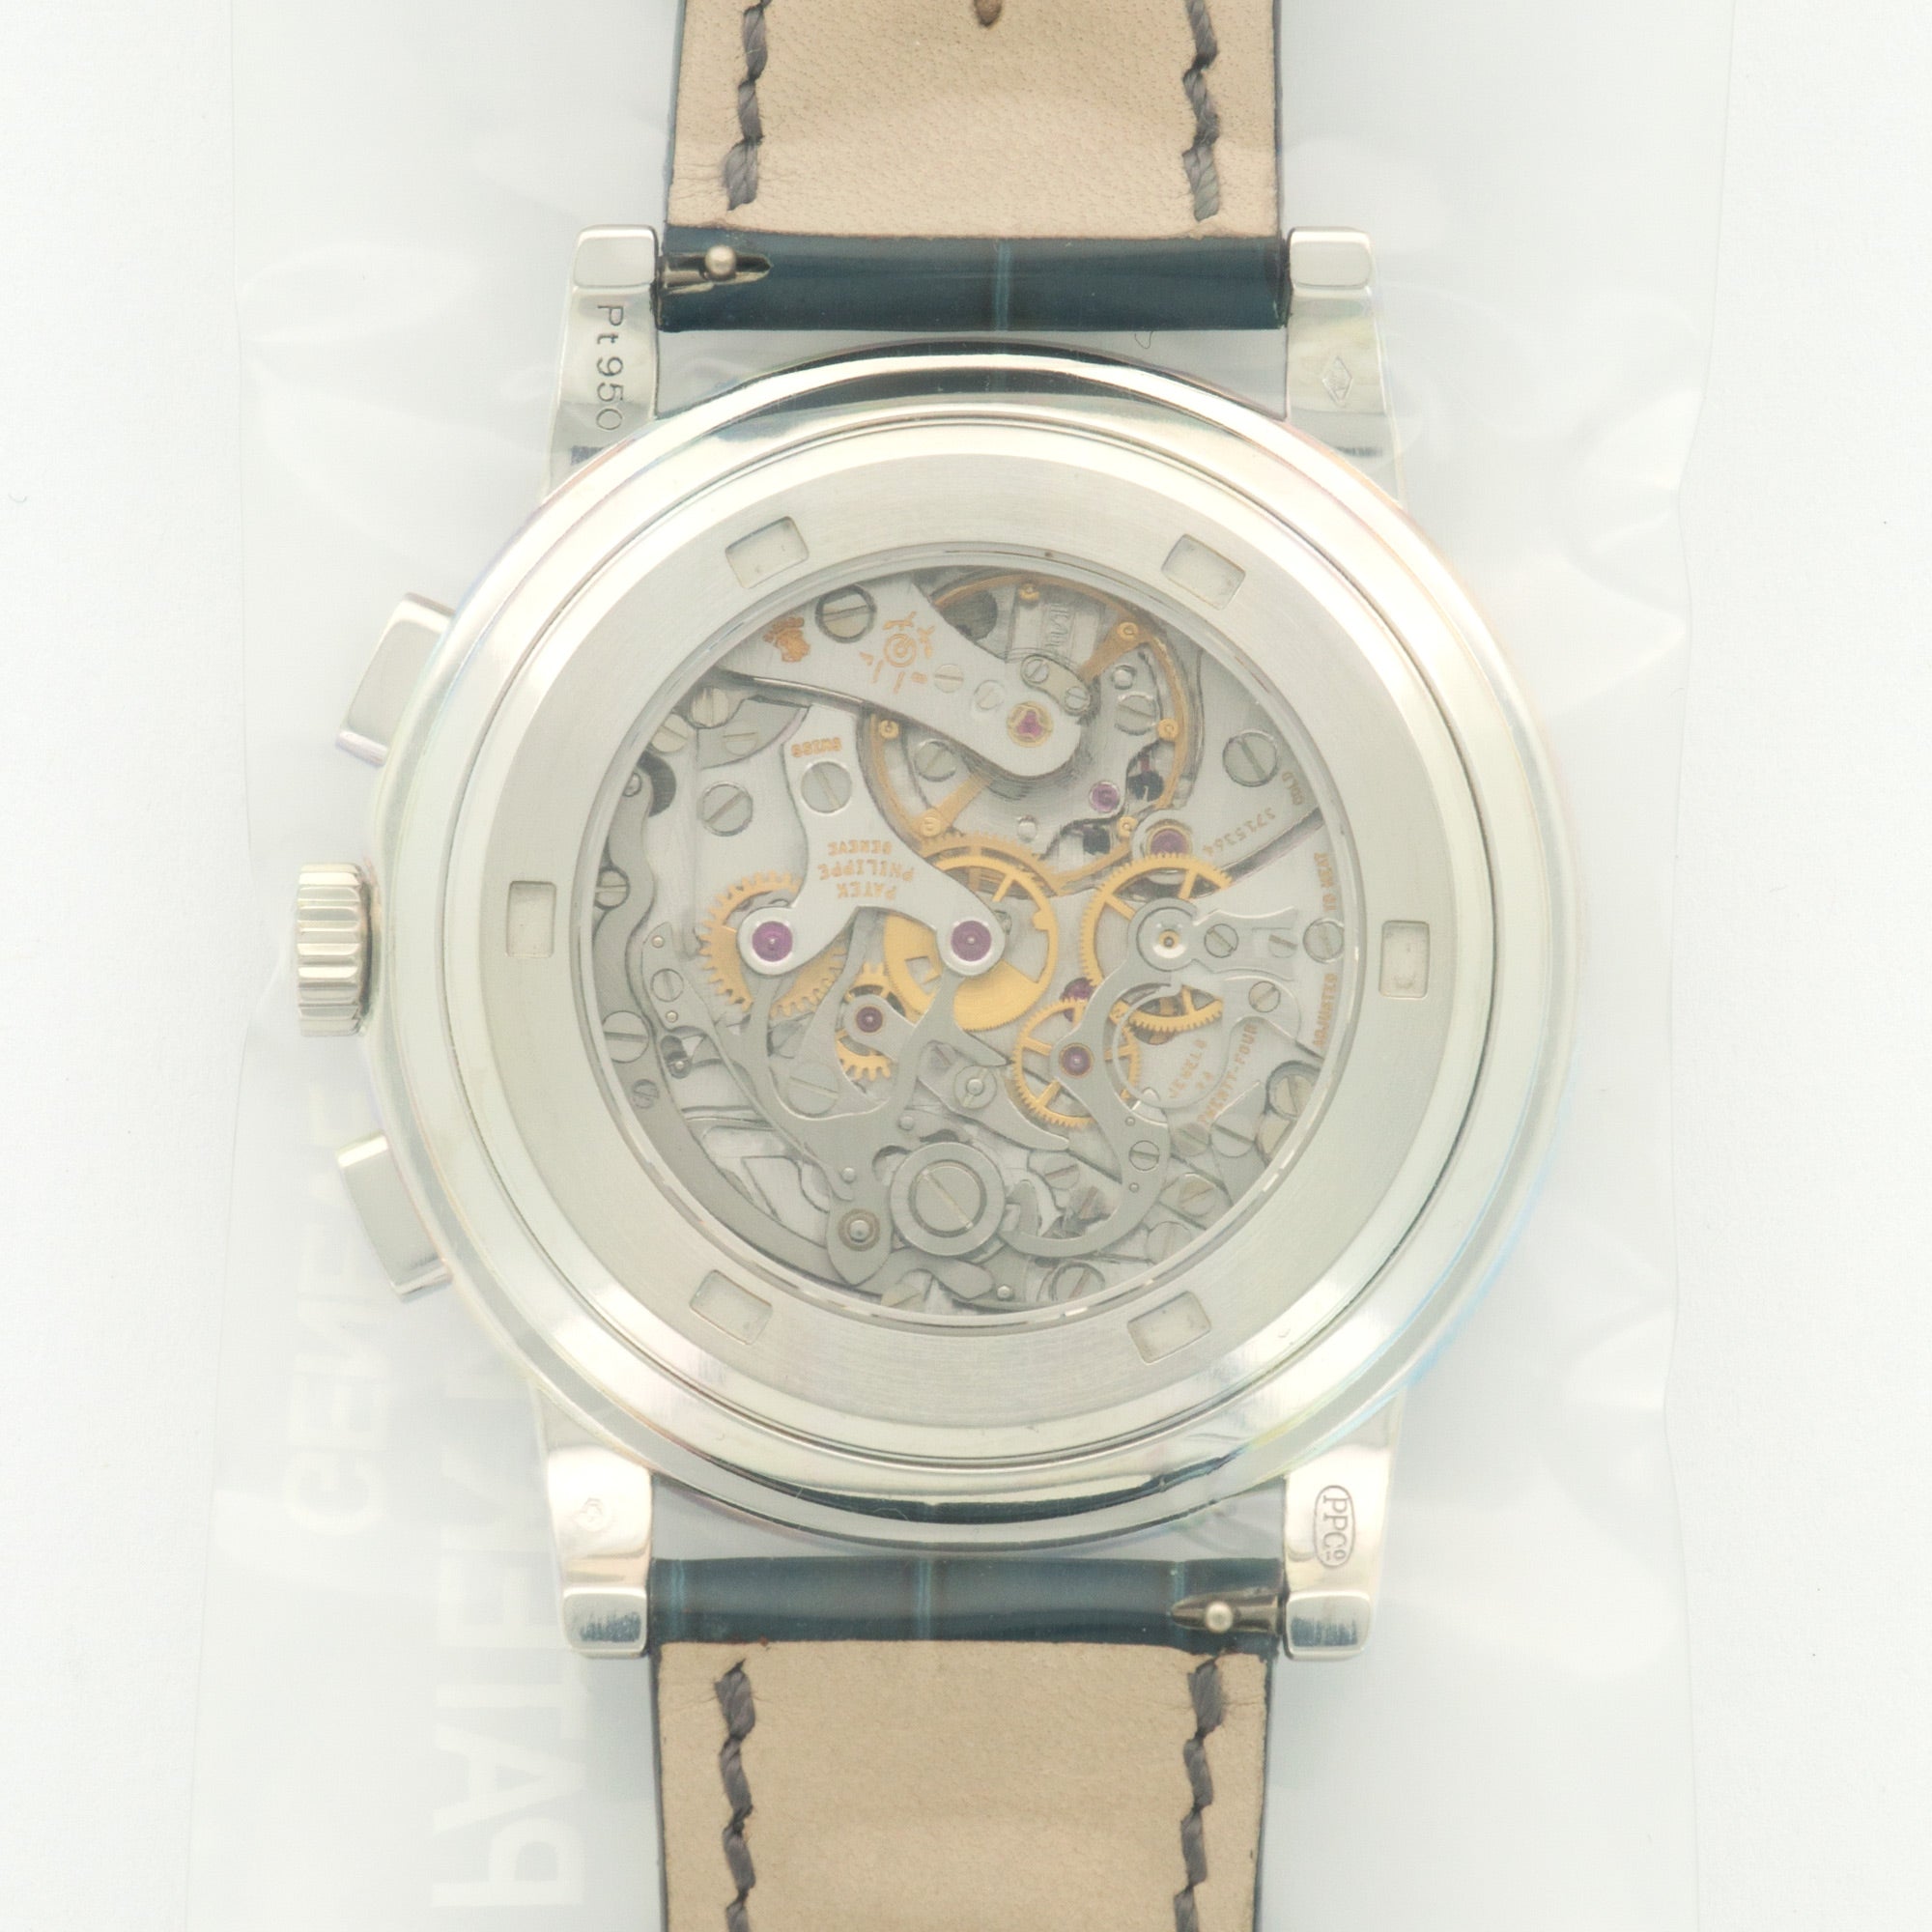 Patek Philippe - Unworn Patek Philippe Platinum Chronograph Ref. 5070 in Original Plastic Seal - The Keystone Watches